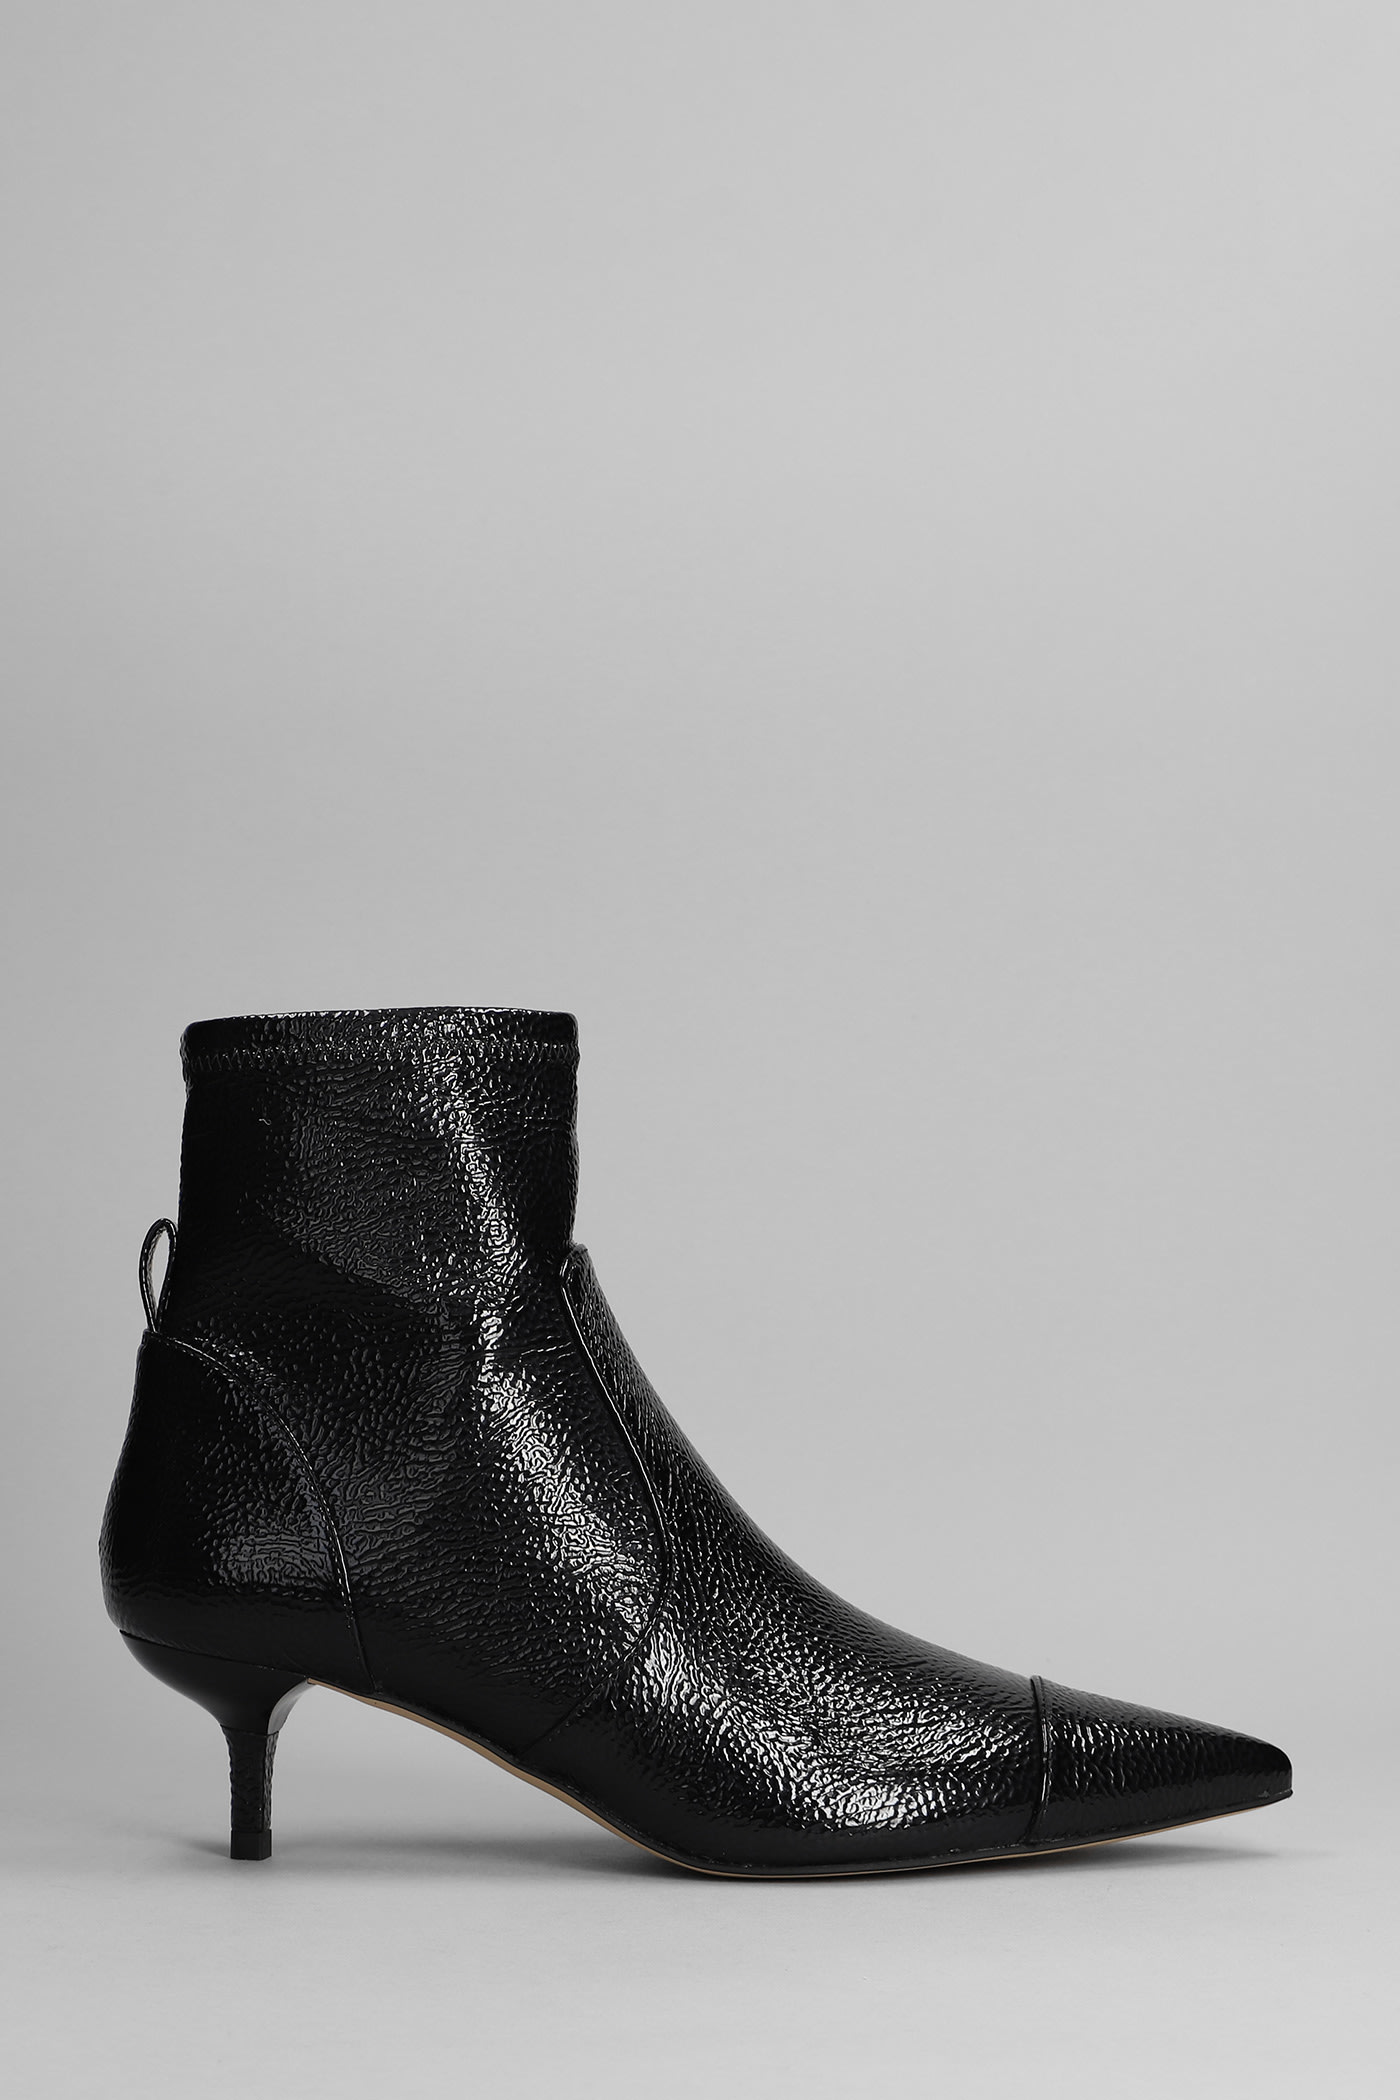 Michael Kors Kadance Kitten High Heels Ankle Boots In Black Leather